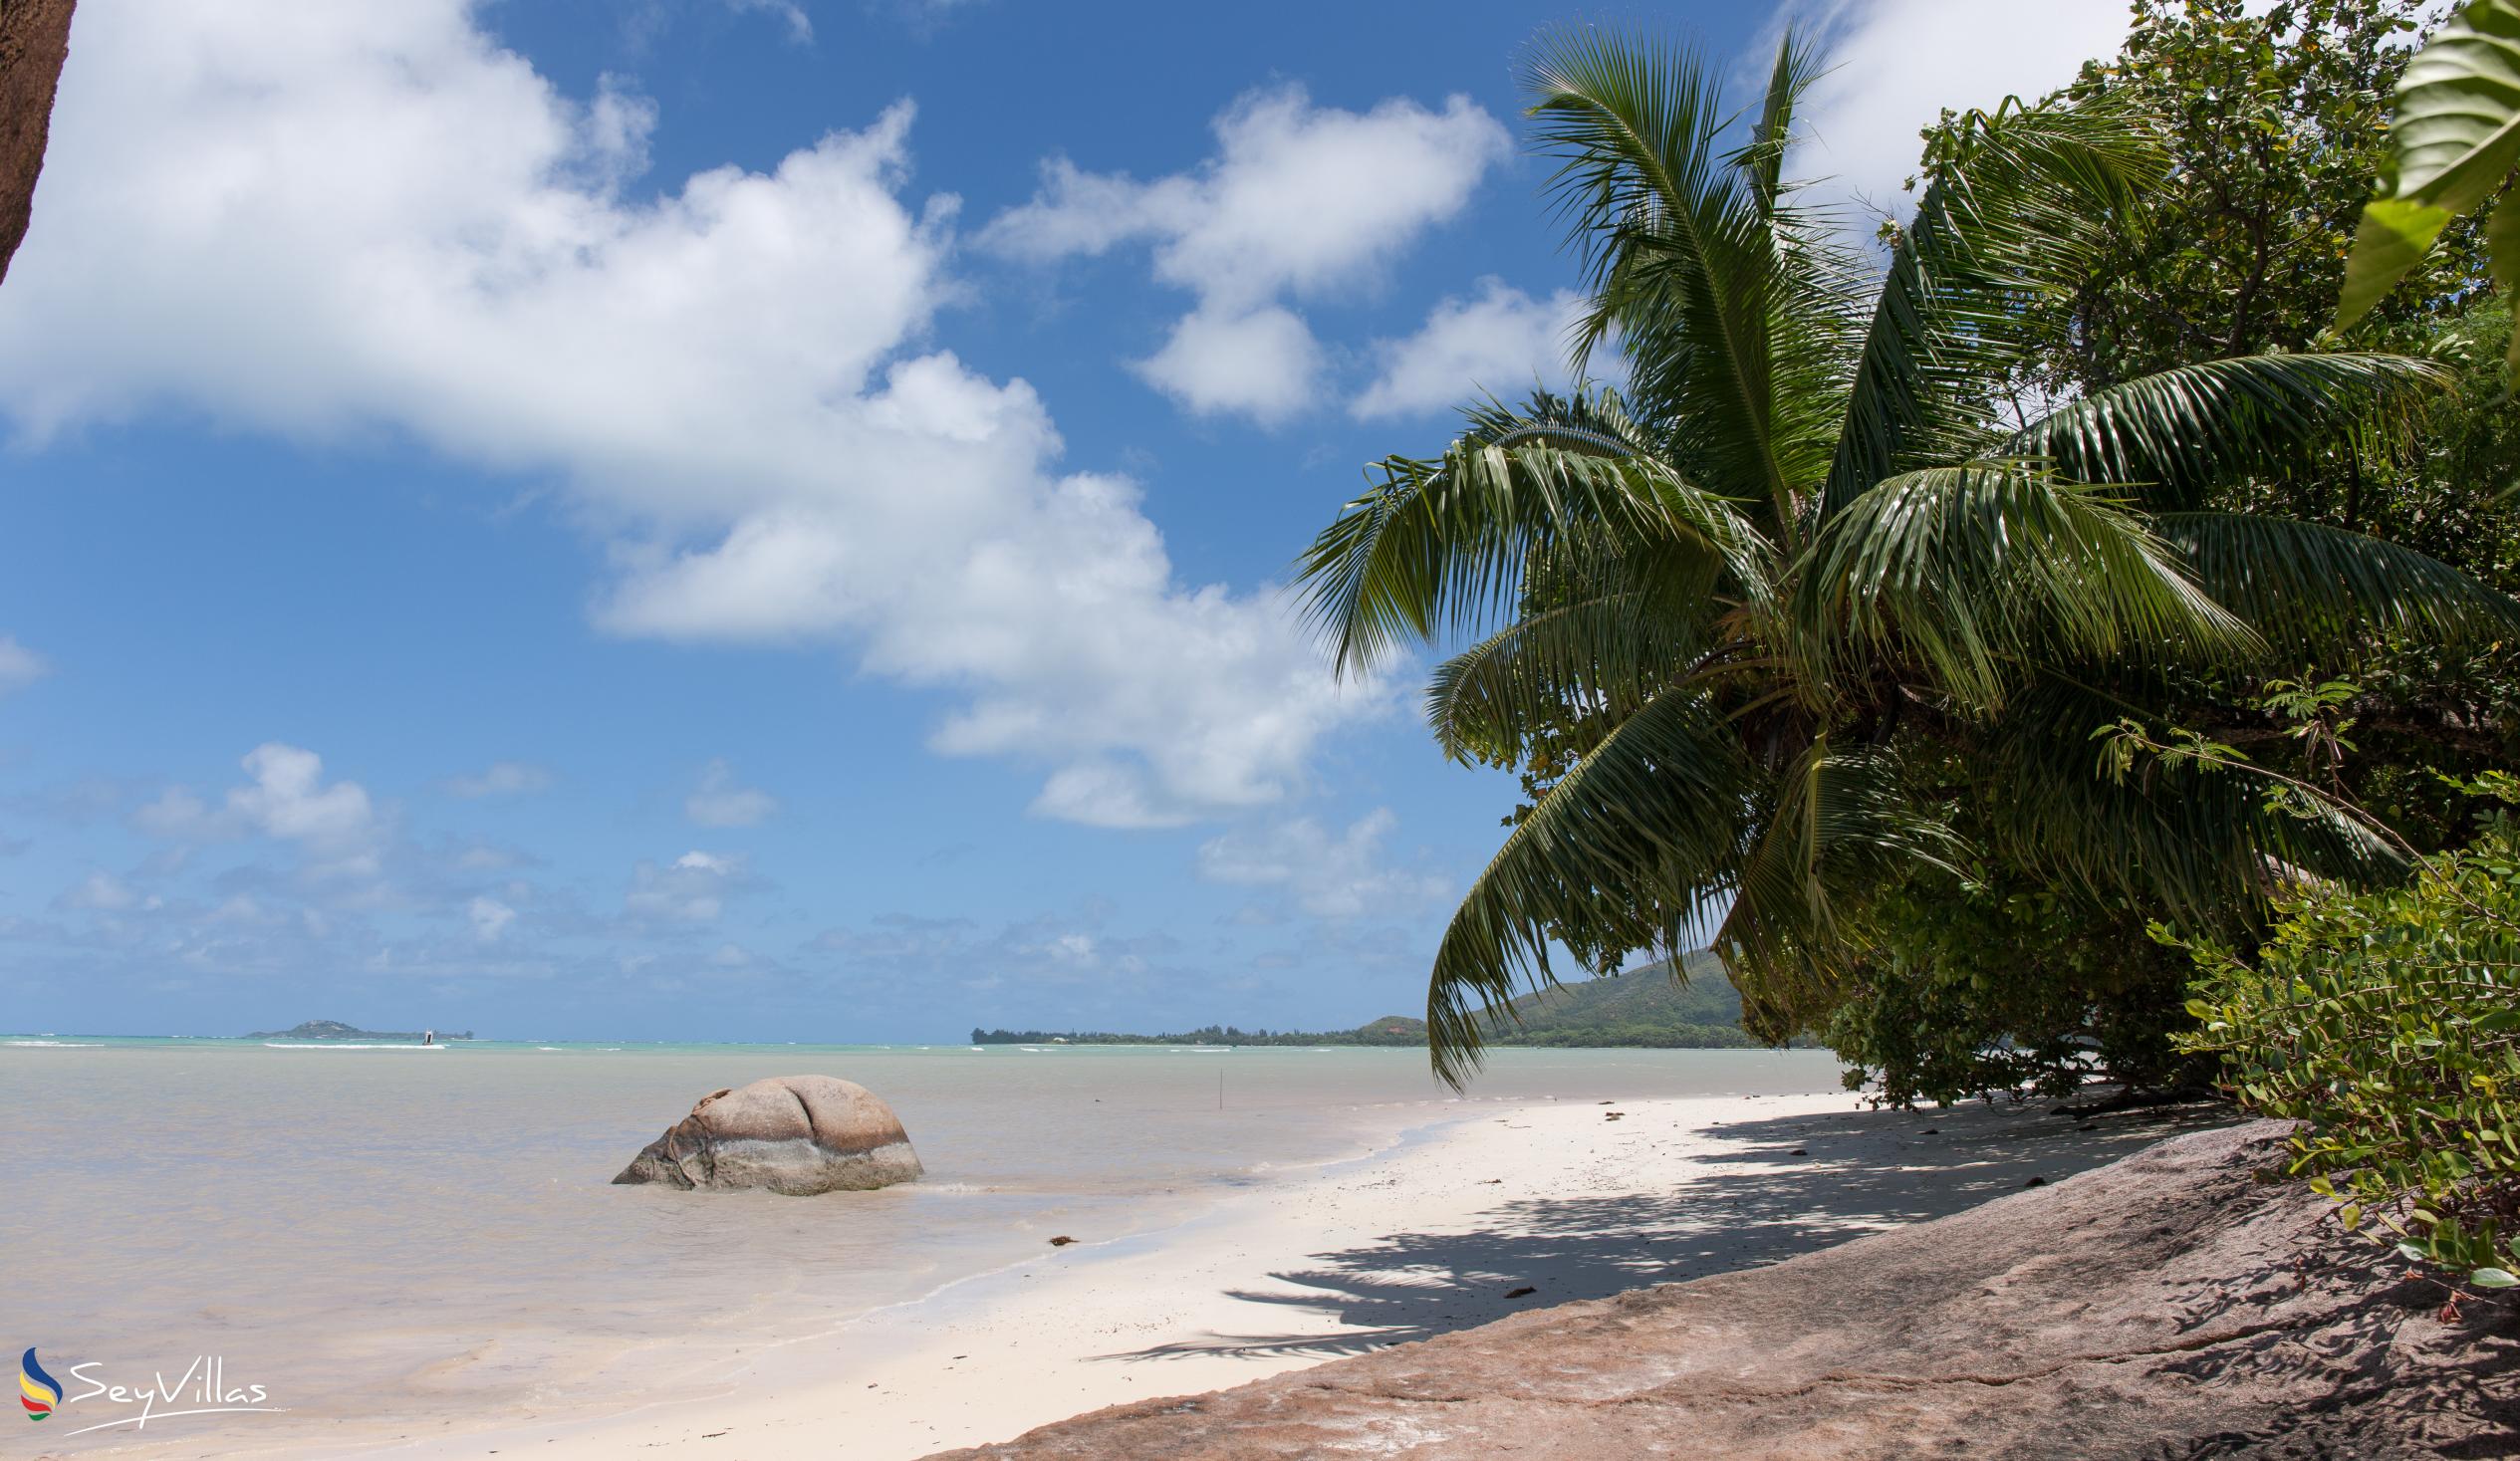 Photo 5: Anse Citron - Praslin (Seychelles)